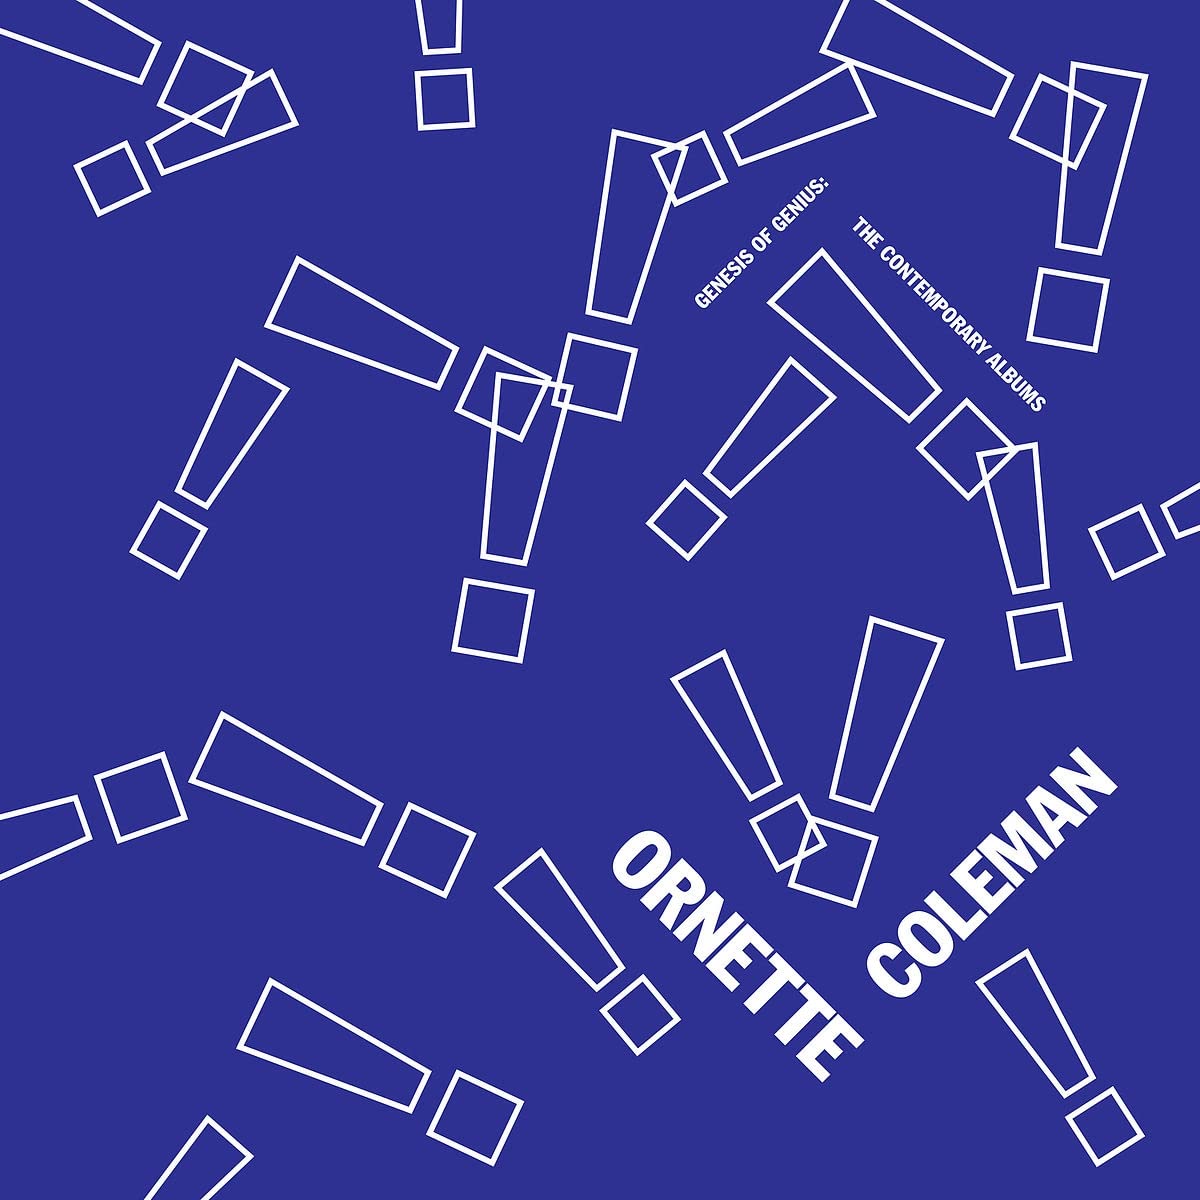 Ornette Coleman - Genesis of Genius: The Contemporary Albums (box set)